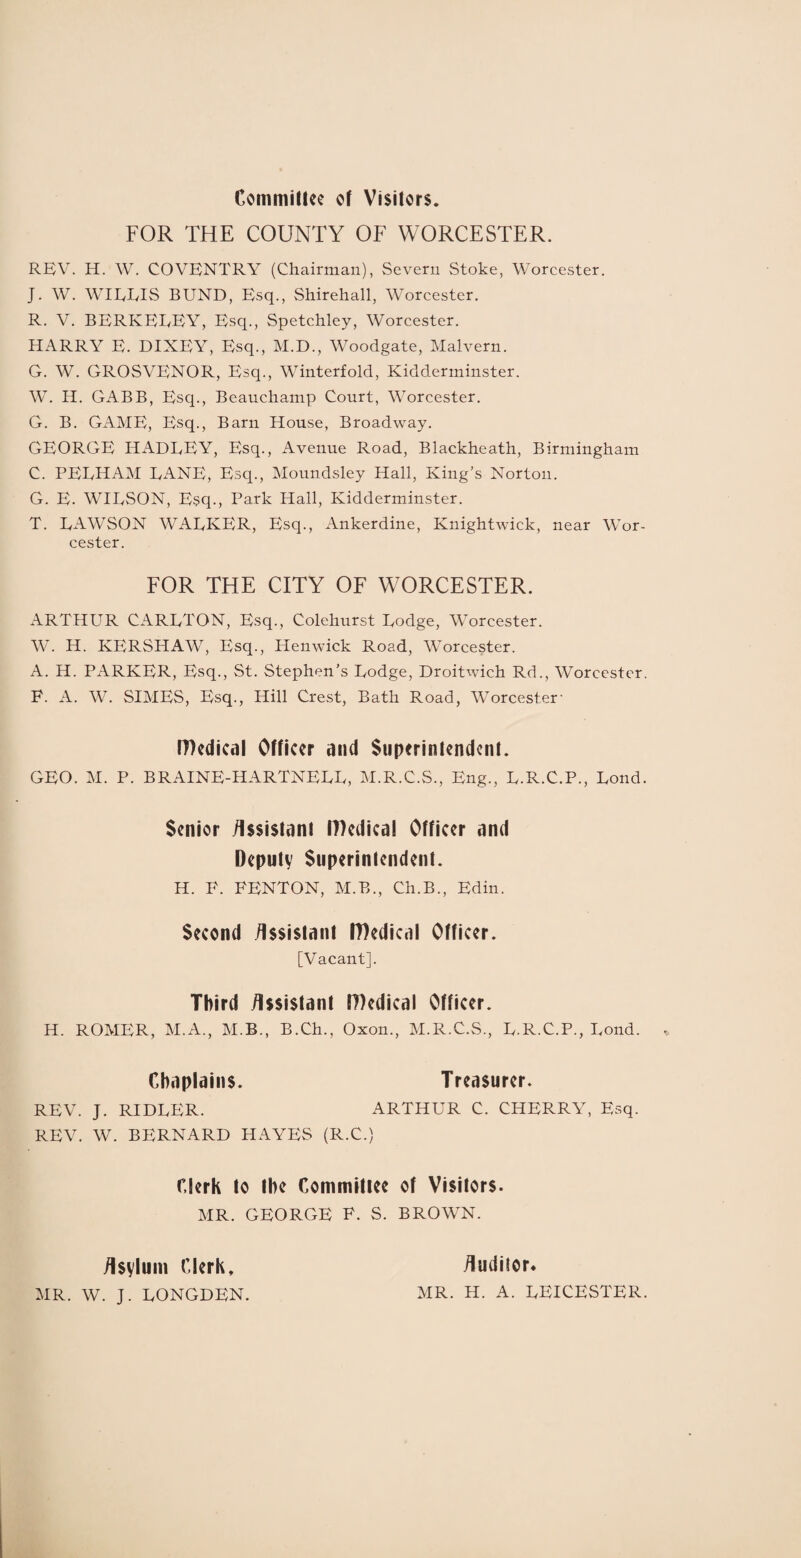 Committee of Visitors. FOR THE COUNTY OF WORCESTER. REV. H. W. COVENTRY (Chairman), Severn Stoke, Worcester. J. W. WIERIS BUND, Esq., Shirehall, Worcester. R. V. BERKELEY, Esq., Spetchley, Worcester. HARRY E. DIXEY, Esq., M.D., Woodgate, Malvern. G. W. GROSVENOR, Esq., Winterfold, Kidderminster. W. H. GABB, Esq., Beauchamp Court, Worcester. G. B. GAME, Esq., Barn House, Broadway. GEORGE HADLEY, Esq., Avenue Road, Blackheath, Birmingham C. PELHAM LANE, Esq., Moundsley Hall, King’s Norton. G. E. WILSON, Esq., Park Hall, Kidderminster. T. LAWSON WALKER, Esq., Ankerdine, Knightwick, near Wor¬ cester. FOR THE CITY OF WORCESTER. ARTHUR CARLTON, Esq., Colehurst Lodge, Worcester. W. H. KERSHAW, Esq., Henwick Road, Worcester. A. H. PARKER, Esq., St. Stephen’s Lodge, Droitwich Rd., Worcester. E. A. W. SIMES, Esq., Hill Crest, Bath Road, Worcester' IDcdical Officer and Superintendent. GEO. M. P. BRAINE-HARTNELL, M.R.C.S., Eng., L.R.C.P., Lond. Senior Assistant tT)edical Officer and Deputy Superintendent. H. P. FENTON, M.B., Ch.B., Edin. Second Assistant ffledical Officer. [Vacant]. Third Assistant IDedical Officer. H. ROMER, M.A., M.B., B.Ch., Oxon., M.R.C.S., L.R.C.P., Lond. Chaplains. Treasurer. REV. J. RIDLER. ARTHUR C. CHERRY, Esq. REV. W. BERNARD HAYES (R.C.) Clerk to the Committee of Visitors. MR. GEORGE F. S. BROWN. Asylum Clerk, Auditor. MR. W. J. LONGDEN. MR. H. A. LEICESTER.